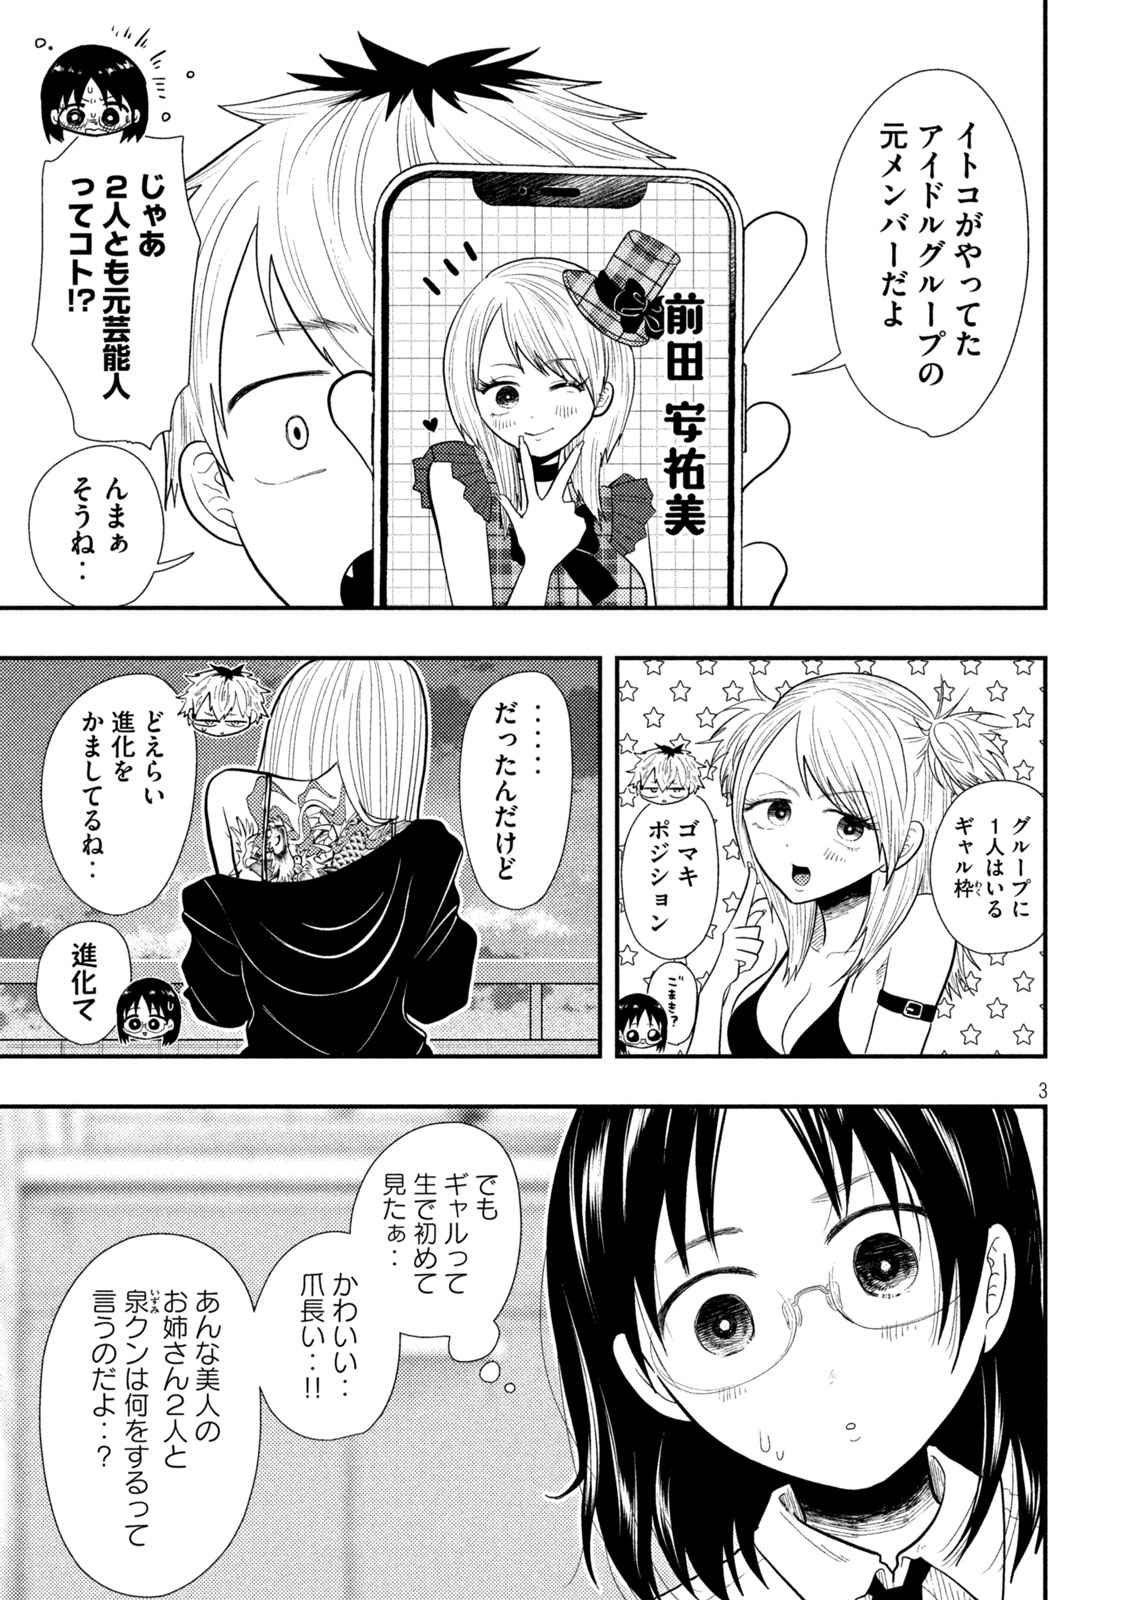 Heisei Haizanhei Sumire-chan - Chapter 18 - Page 3